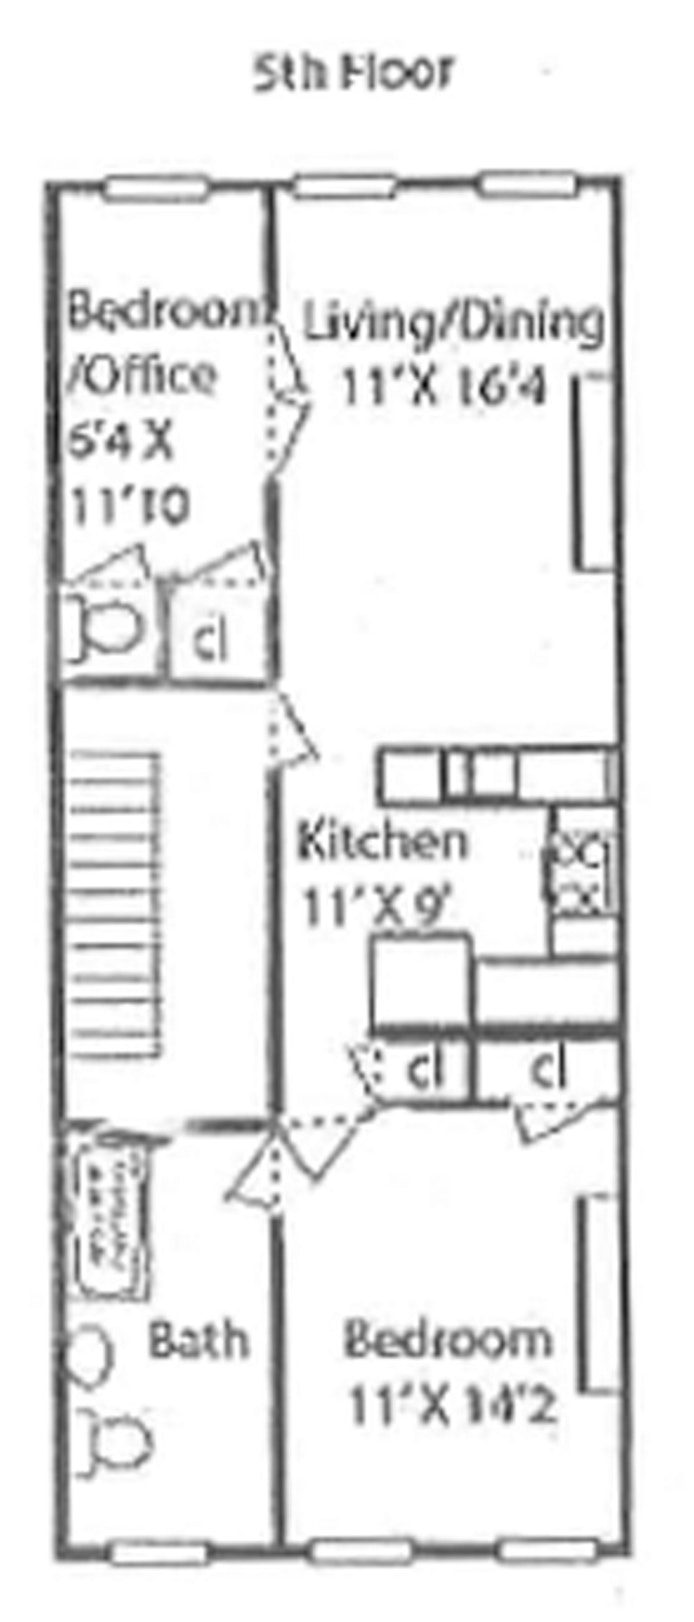 Floorplan for 242 Washington Avenue, 4